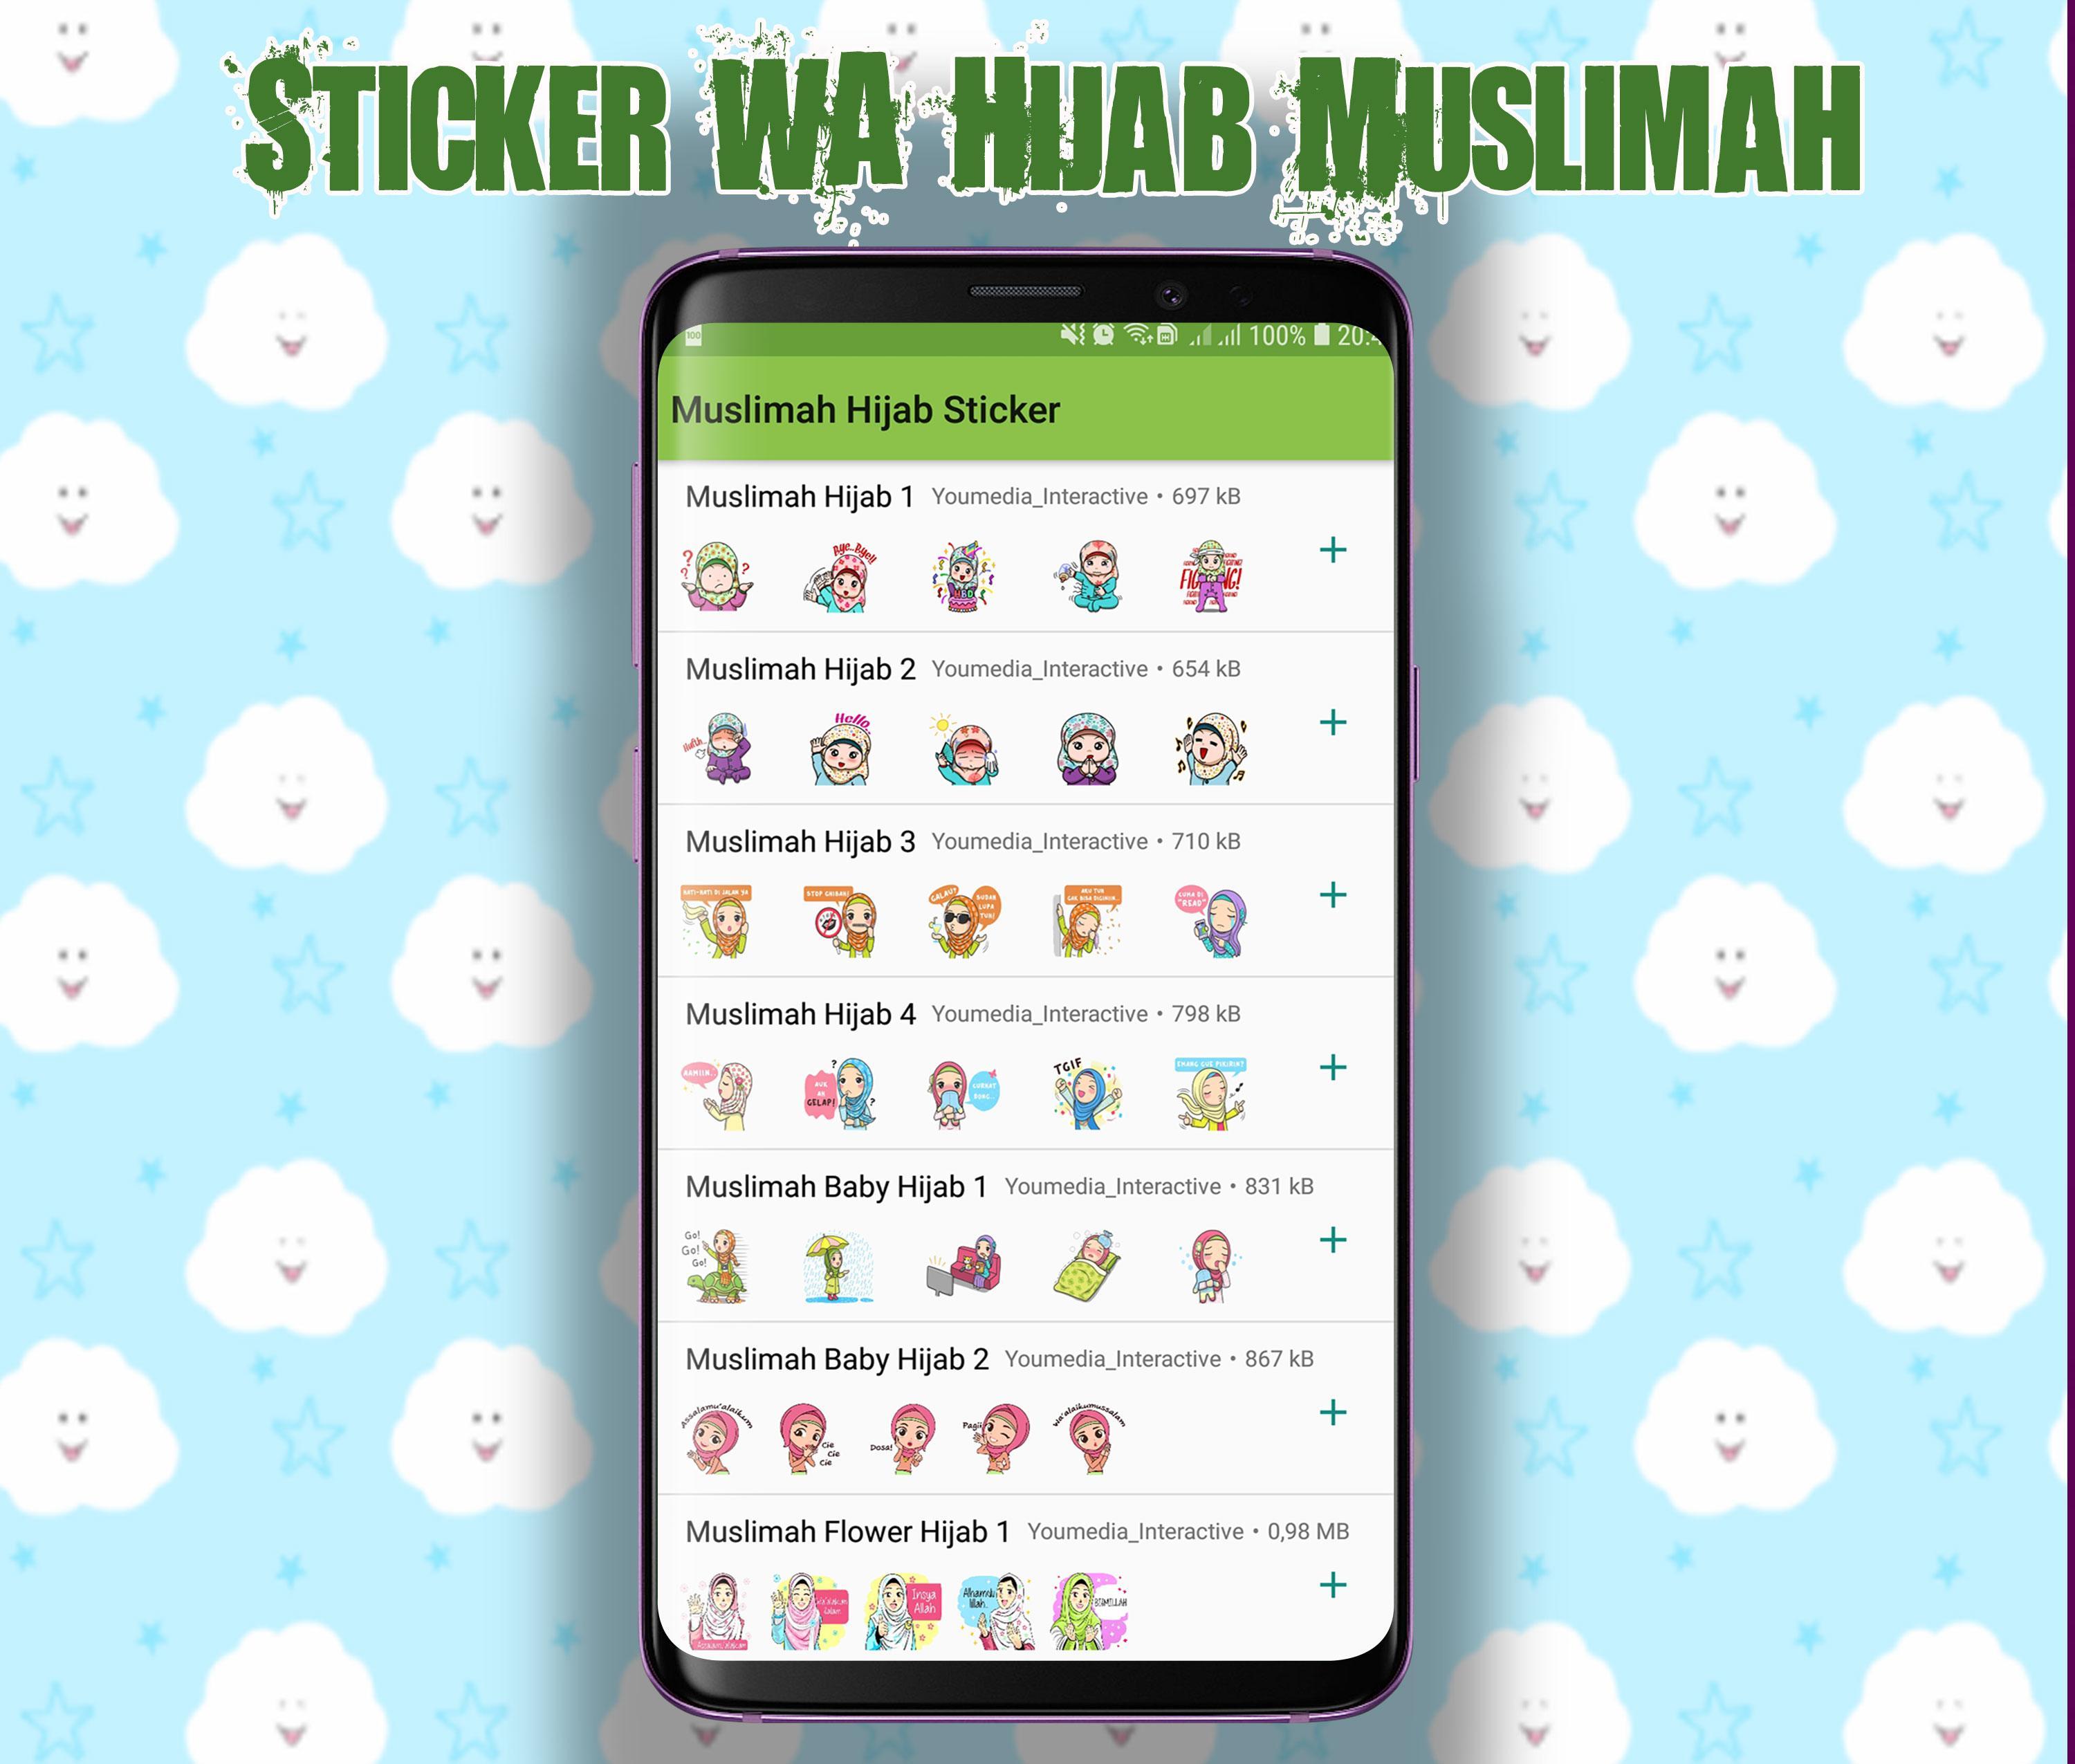 Sticker Pribadi Wa Hijab Muslimah For Android Apk Download